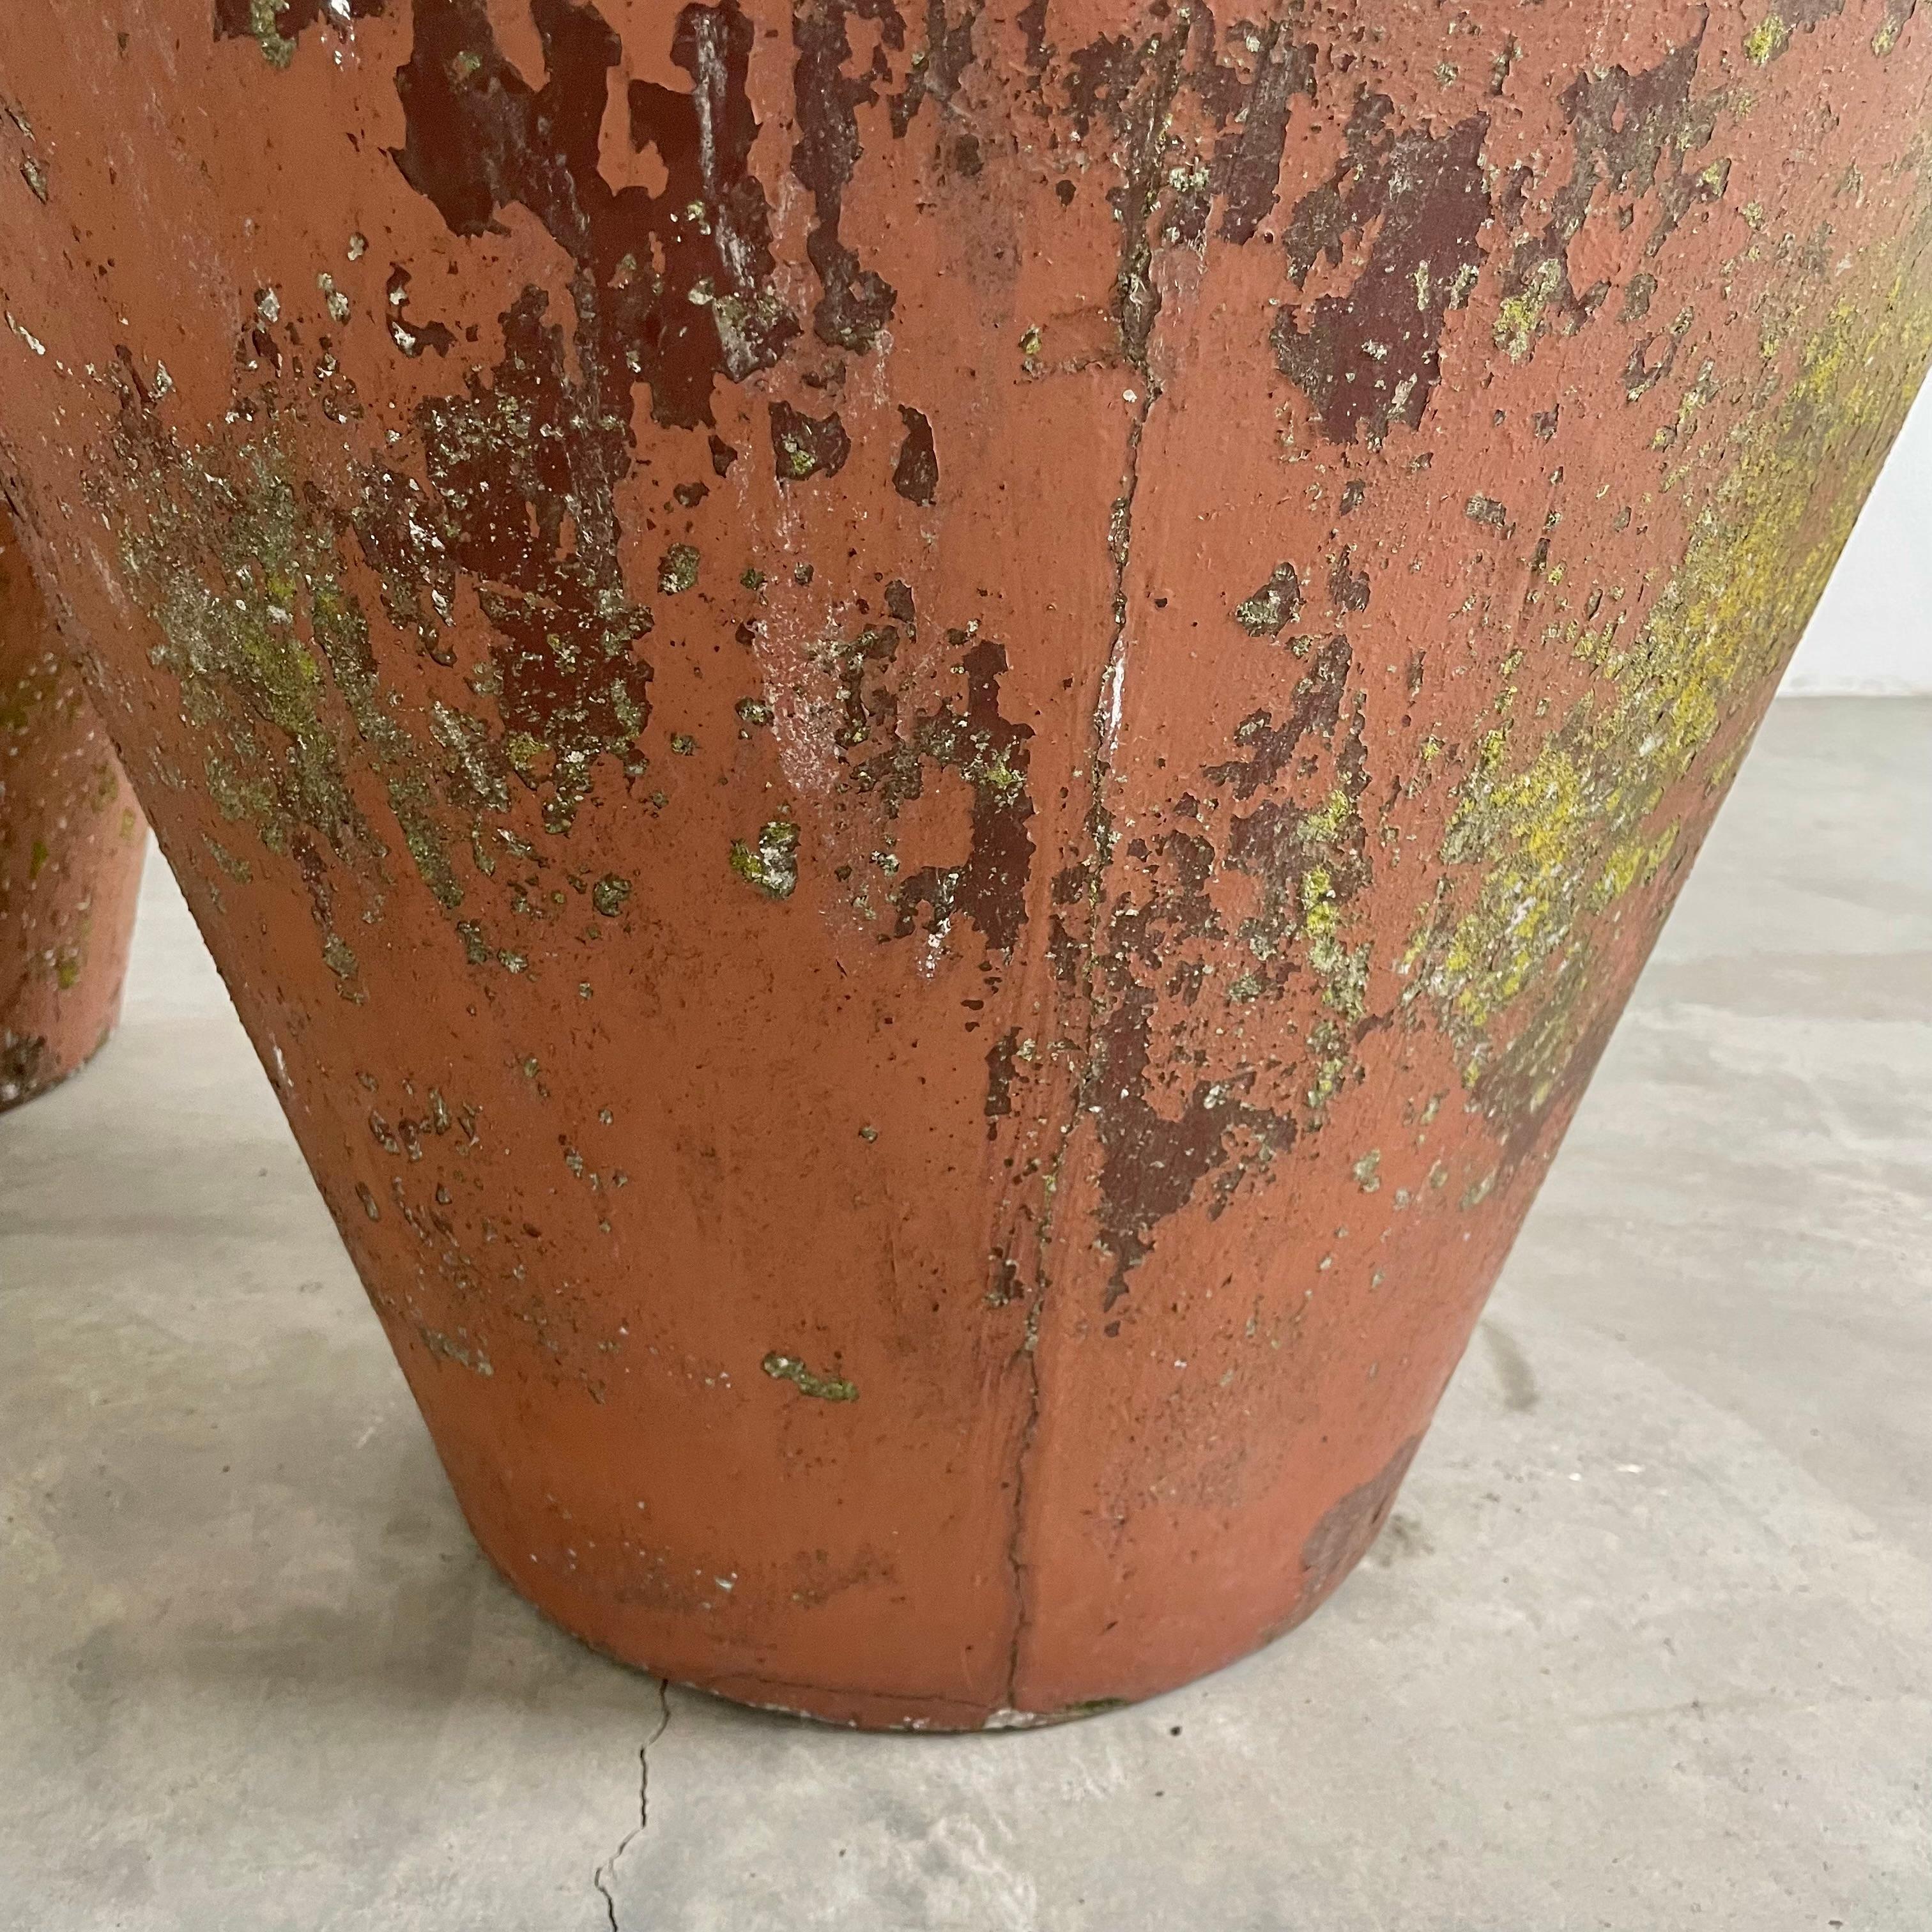 Monumental Willy Guhl Concrete Vase, 1960s Switzerland For Sale 5